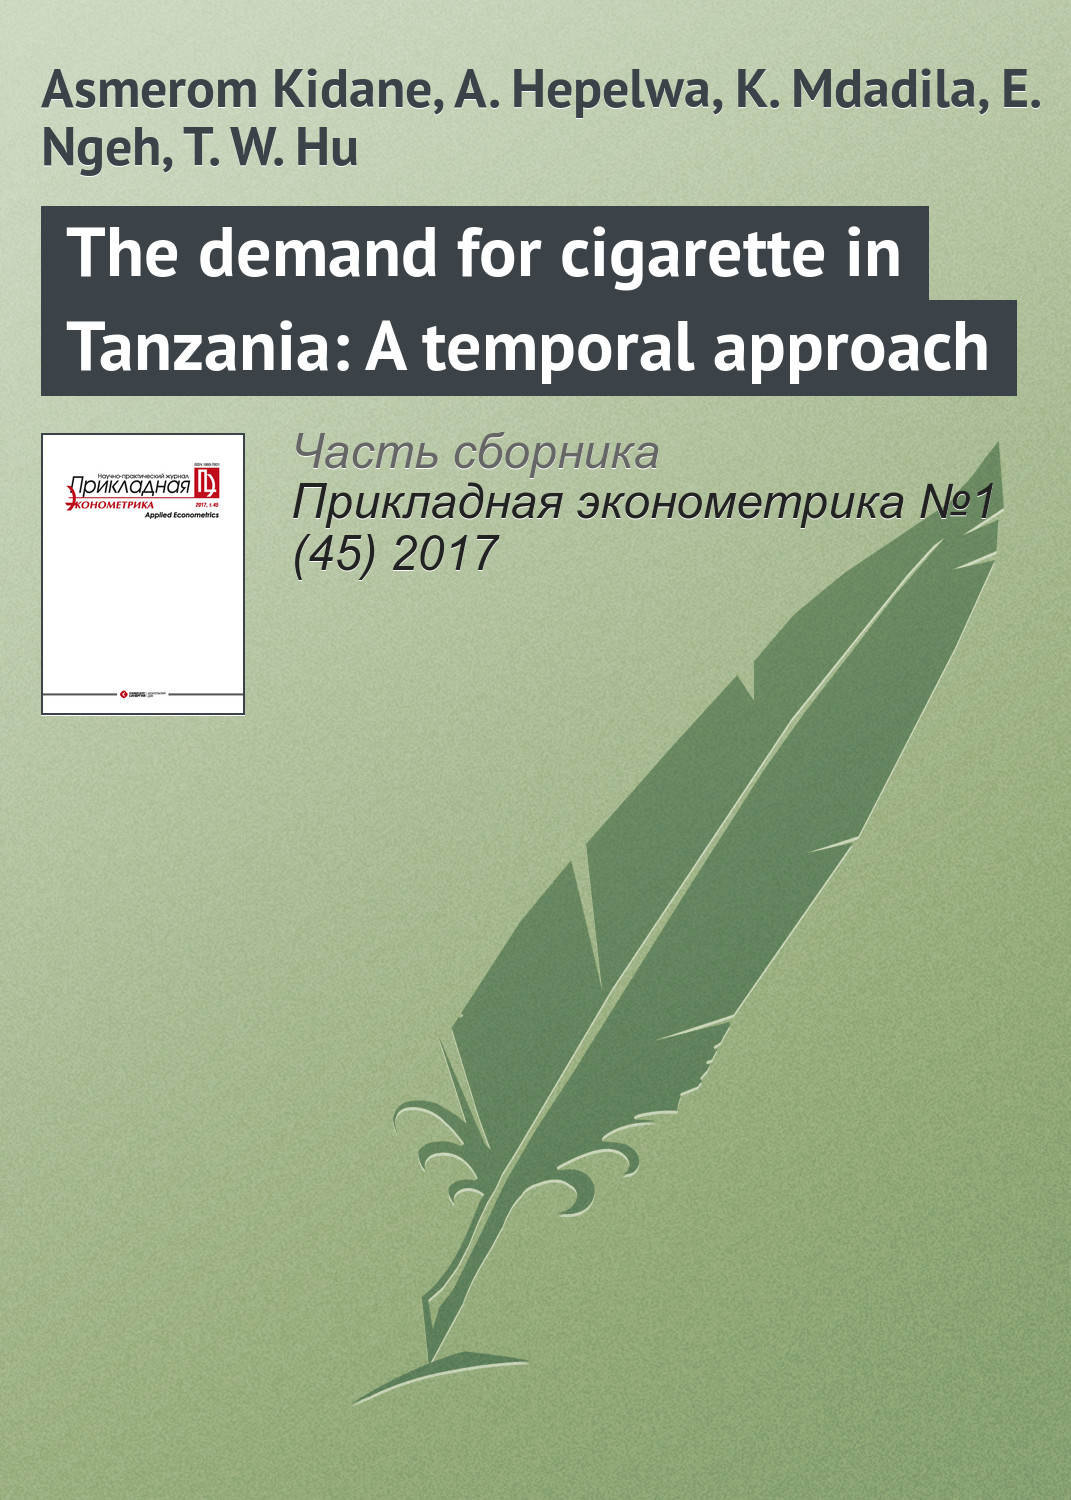 The demand for cigarette in Tanzania: A temporal approach